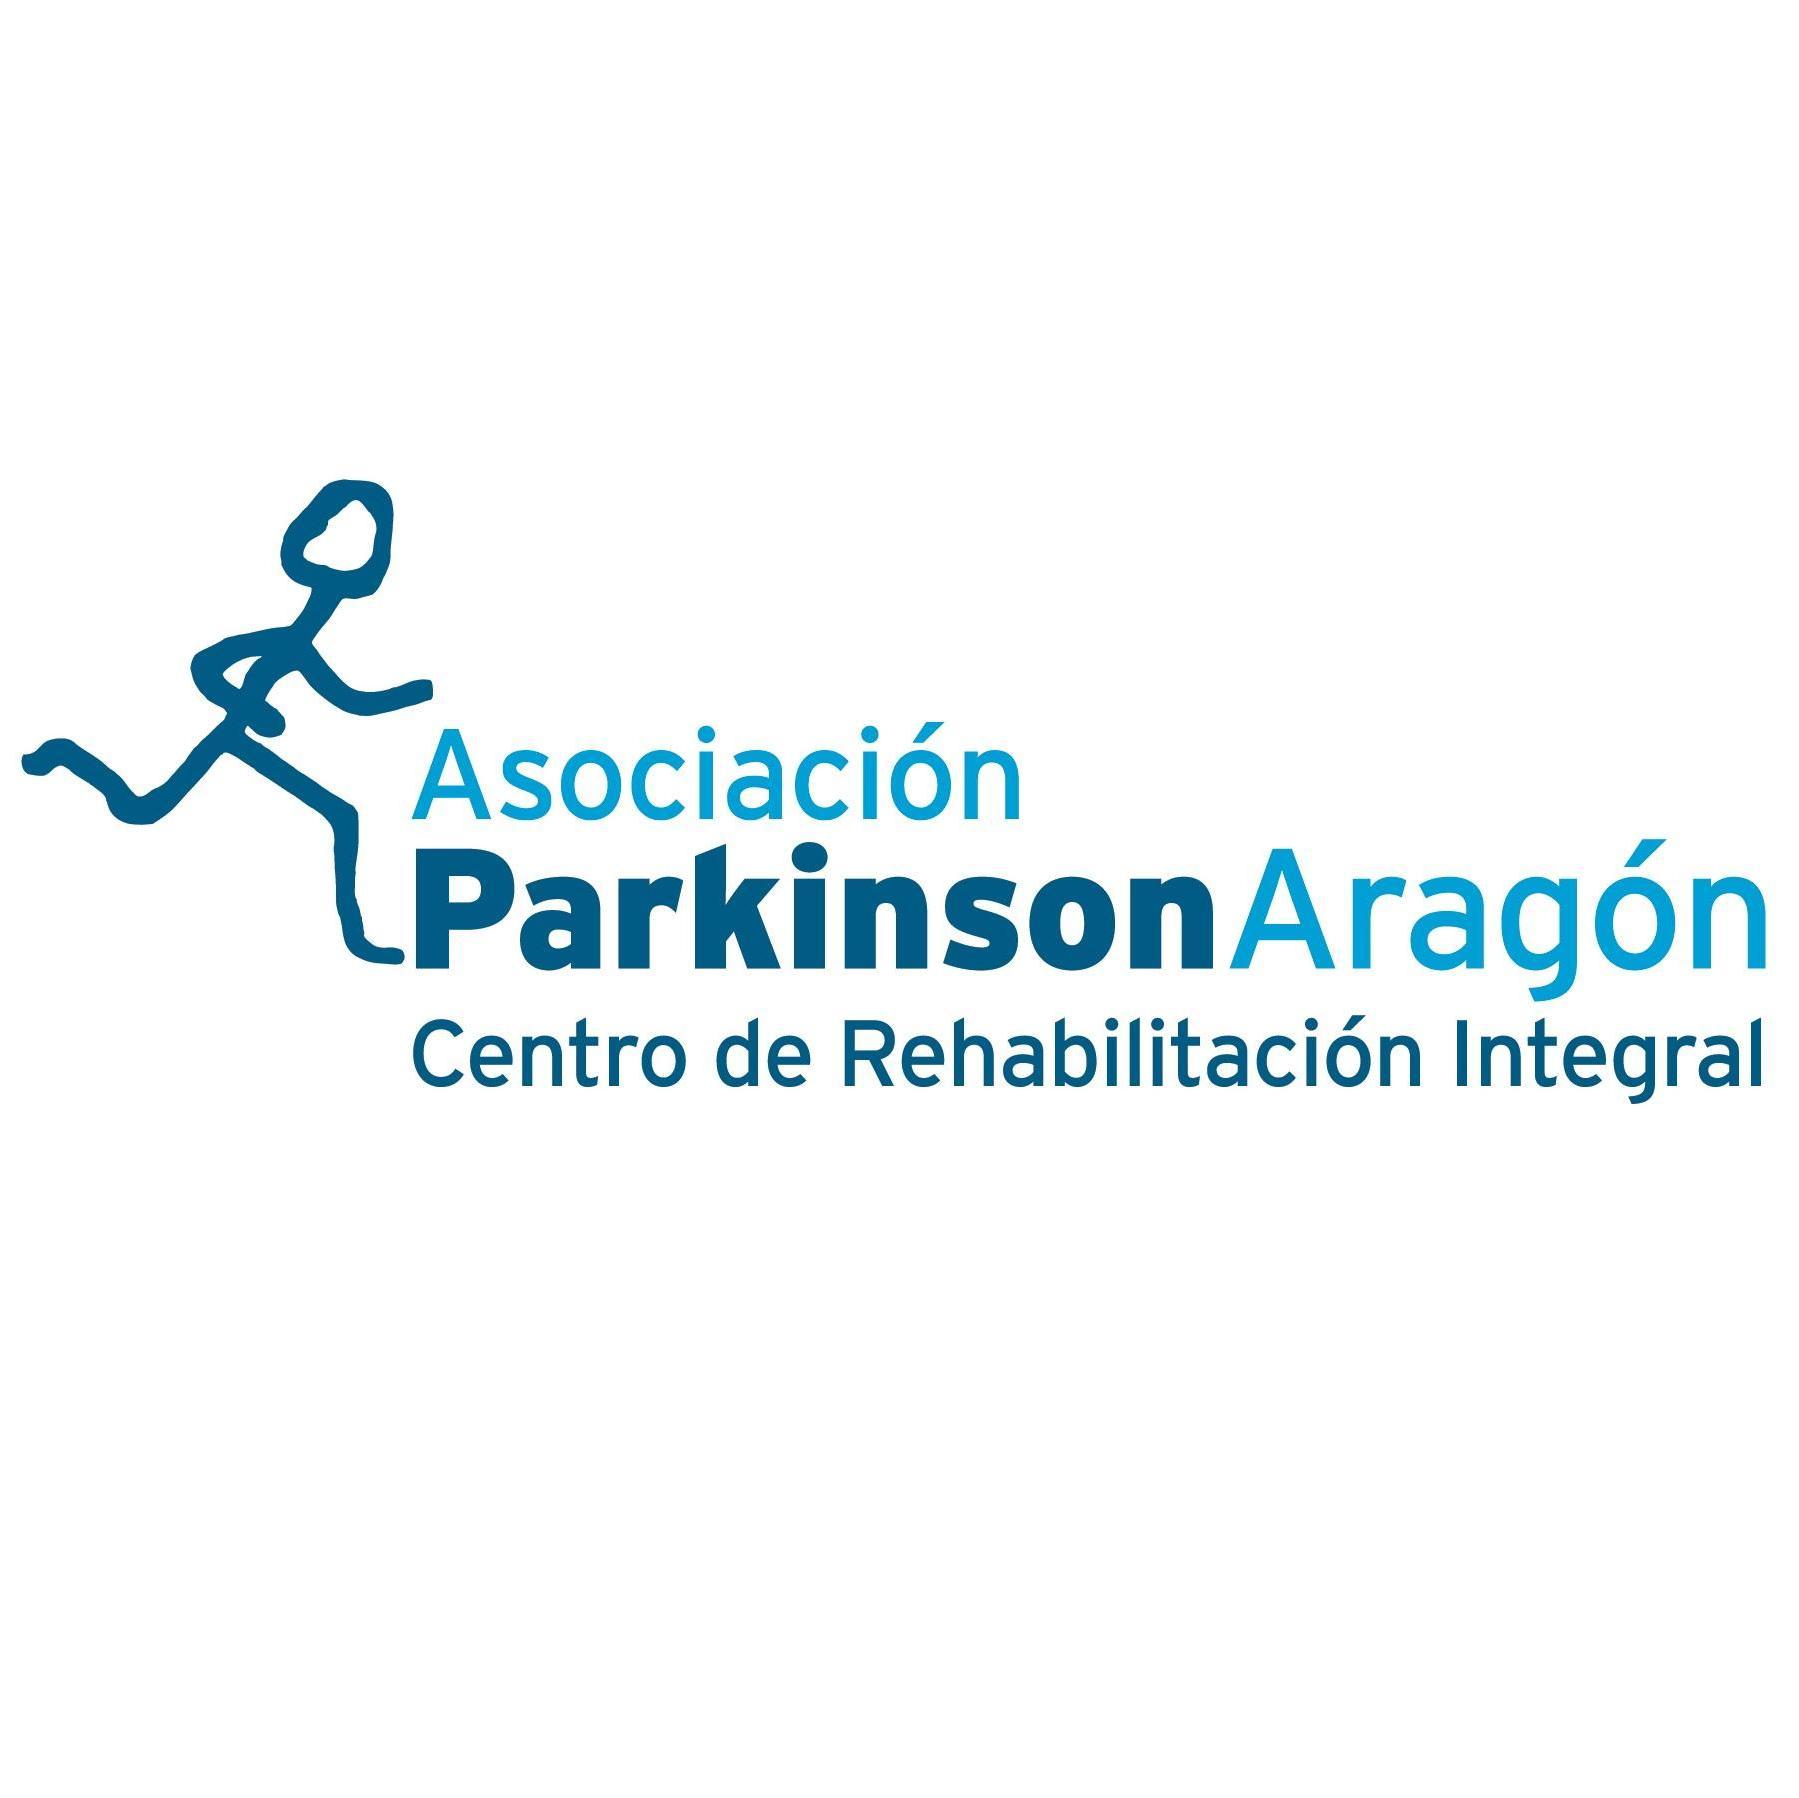 Asociación Parkinson Aragón Profile, news, ratings and communication